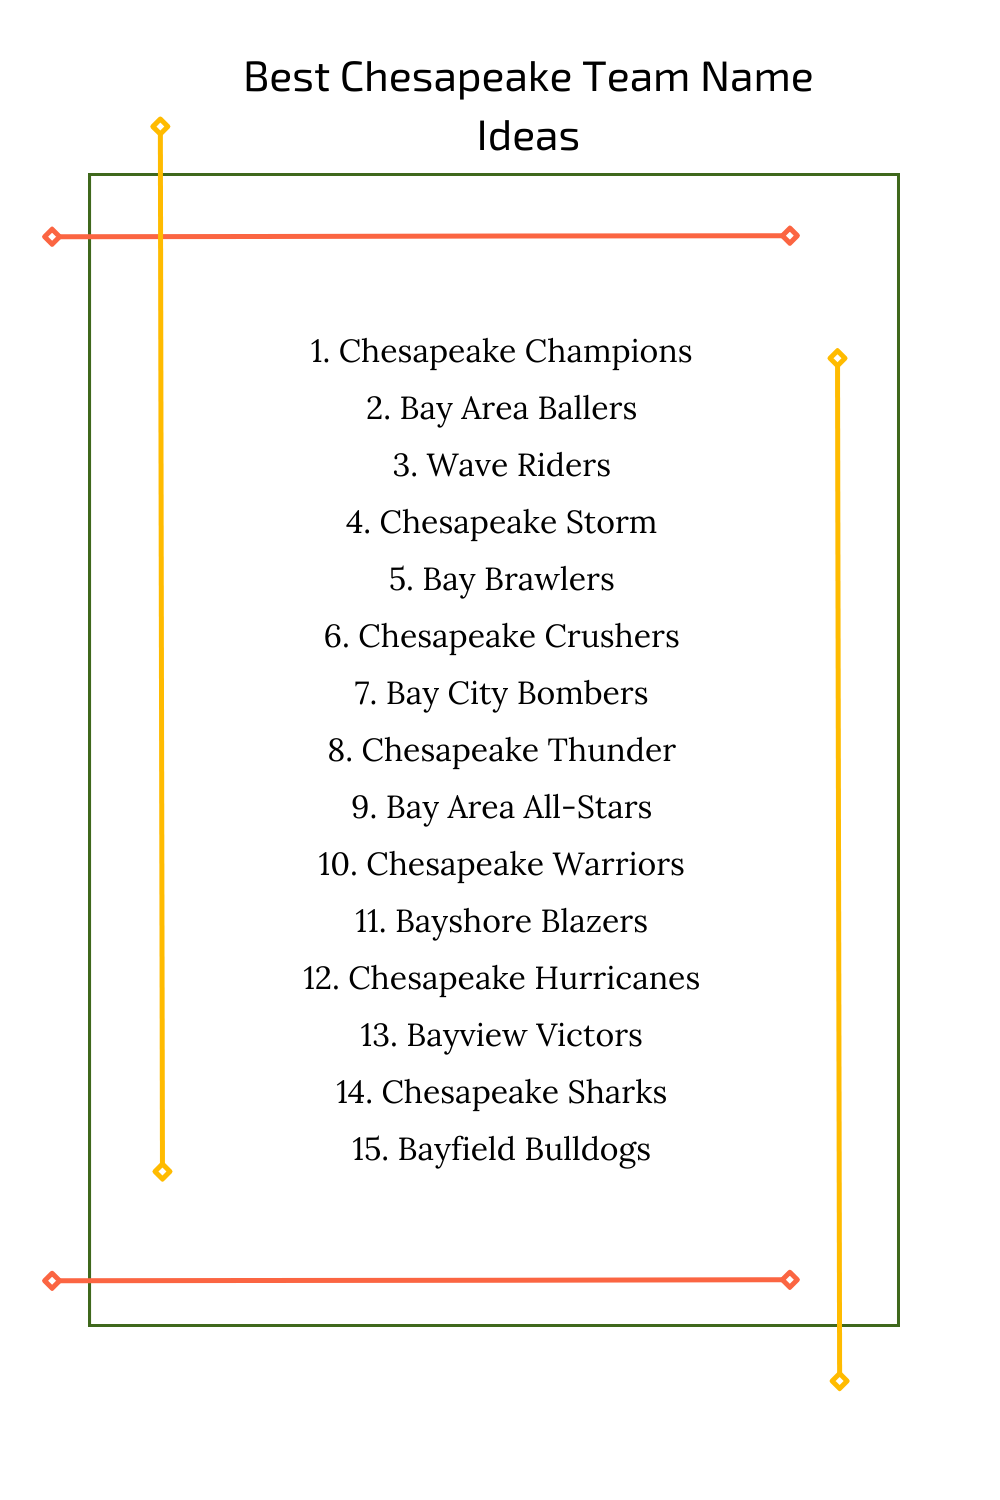 Best Chesapeake Team Name Ideas